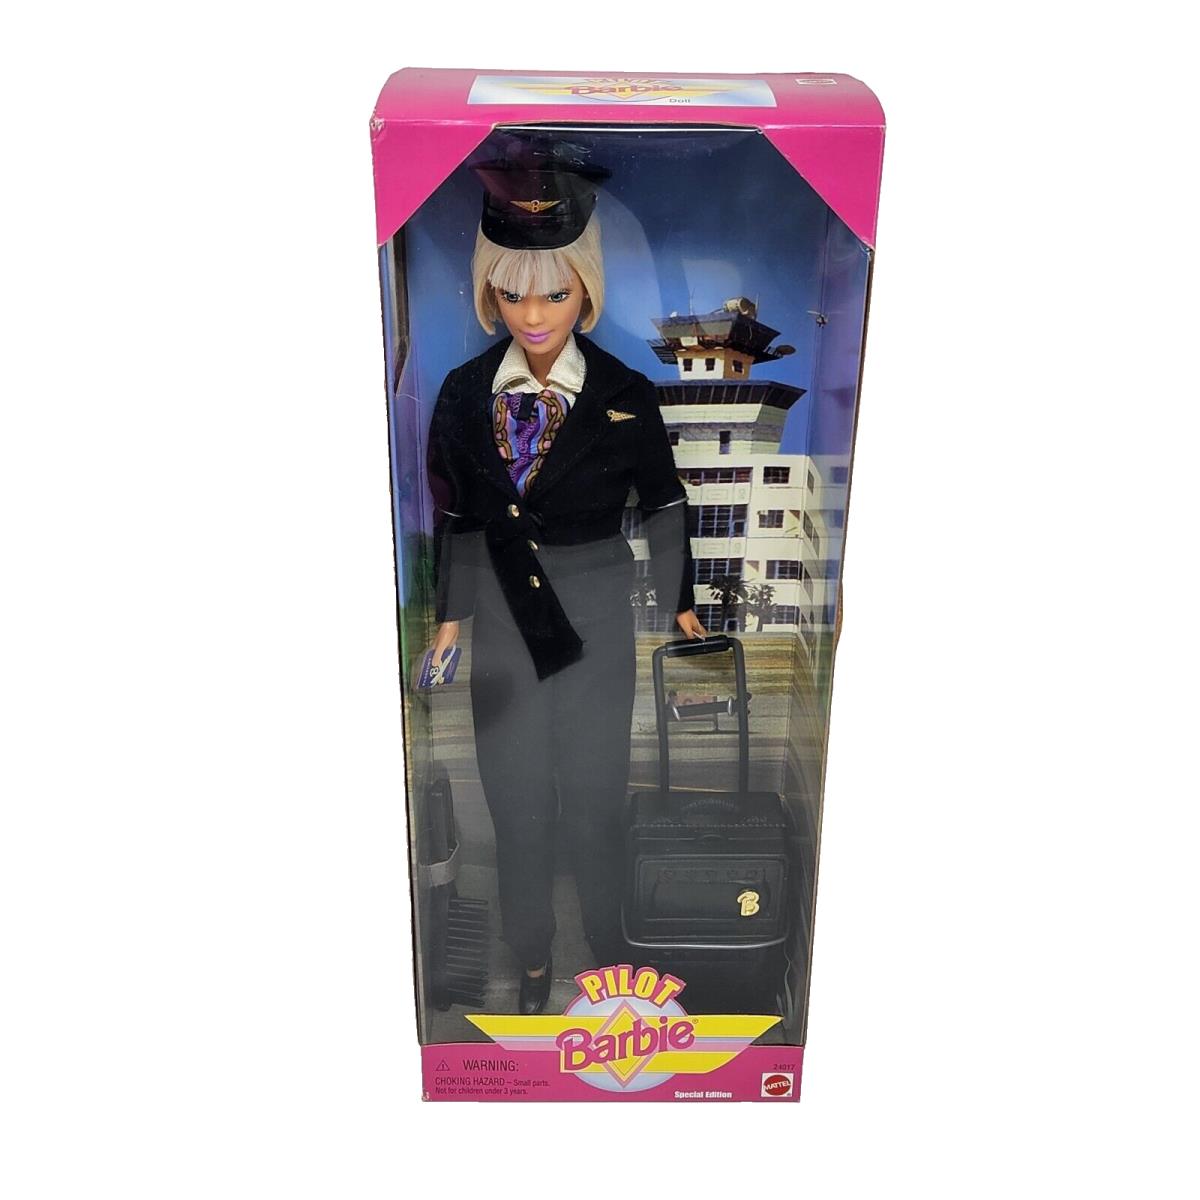 1999 Mattel Pilot Barbie Doll 24017 Short Blonde Hair W Suitcase